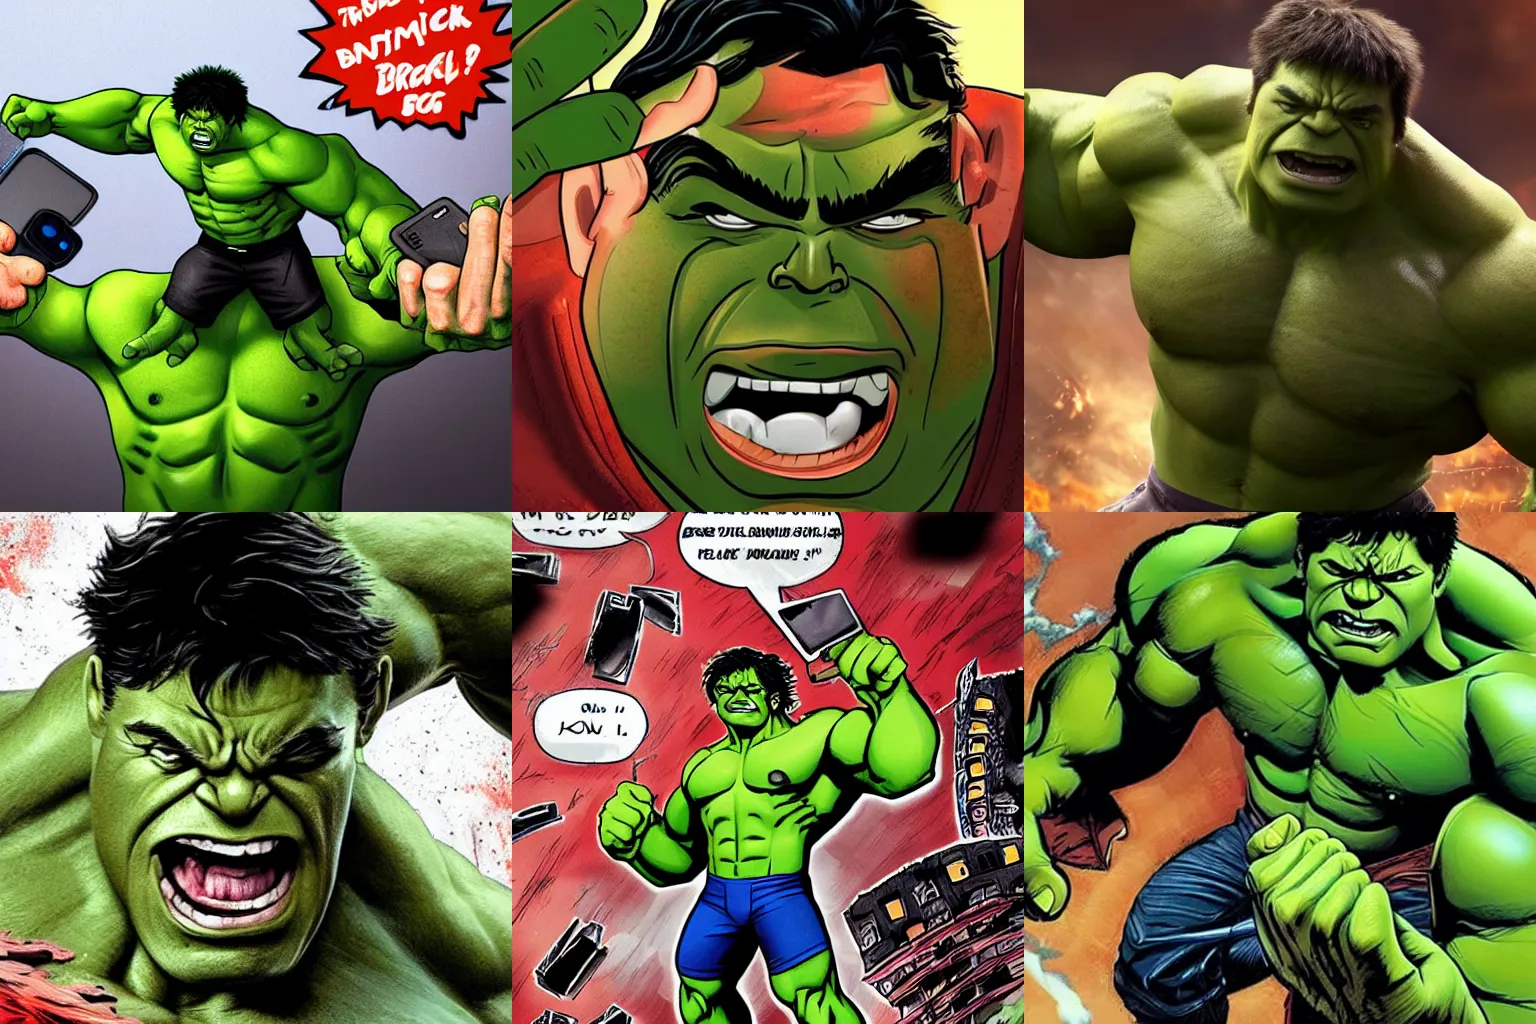 Prompt: Hulk breaking his phone